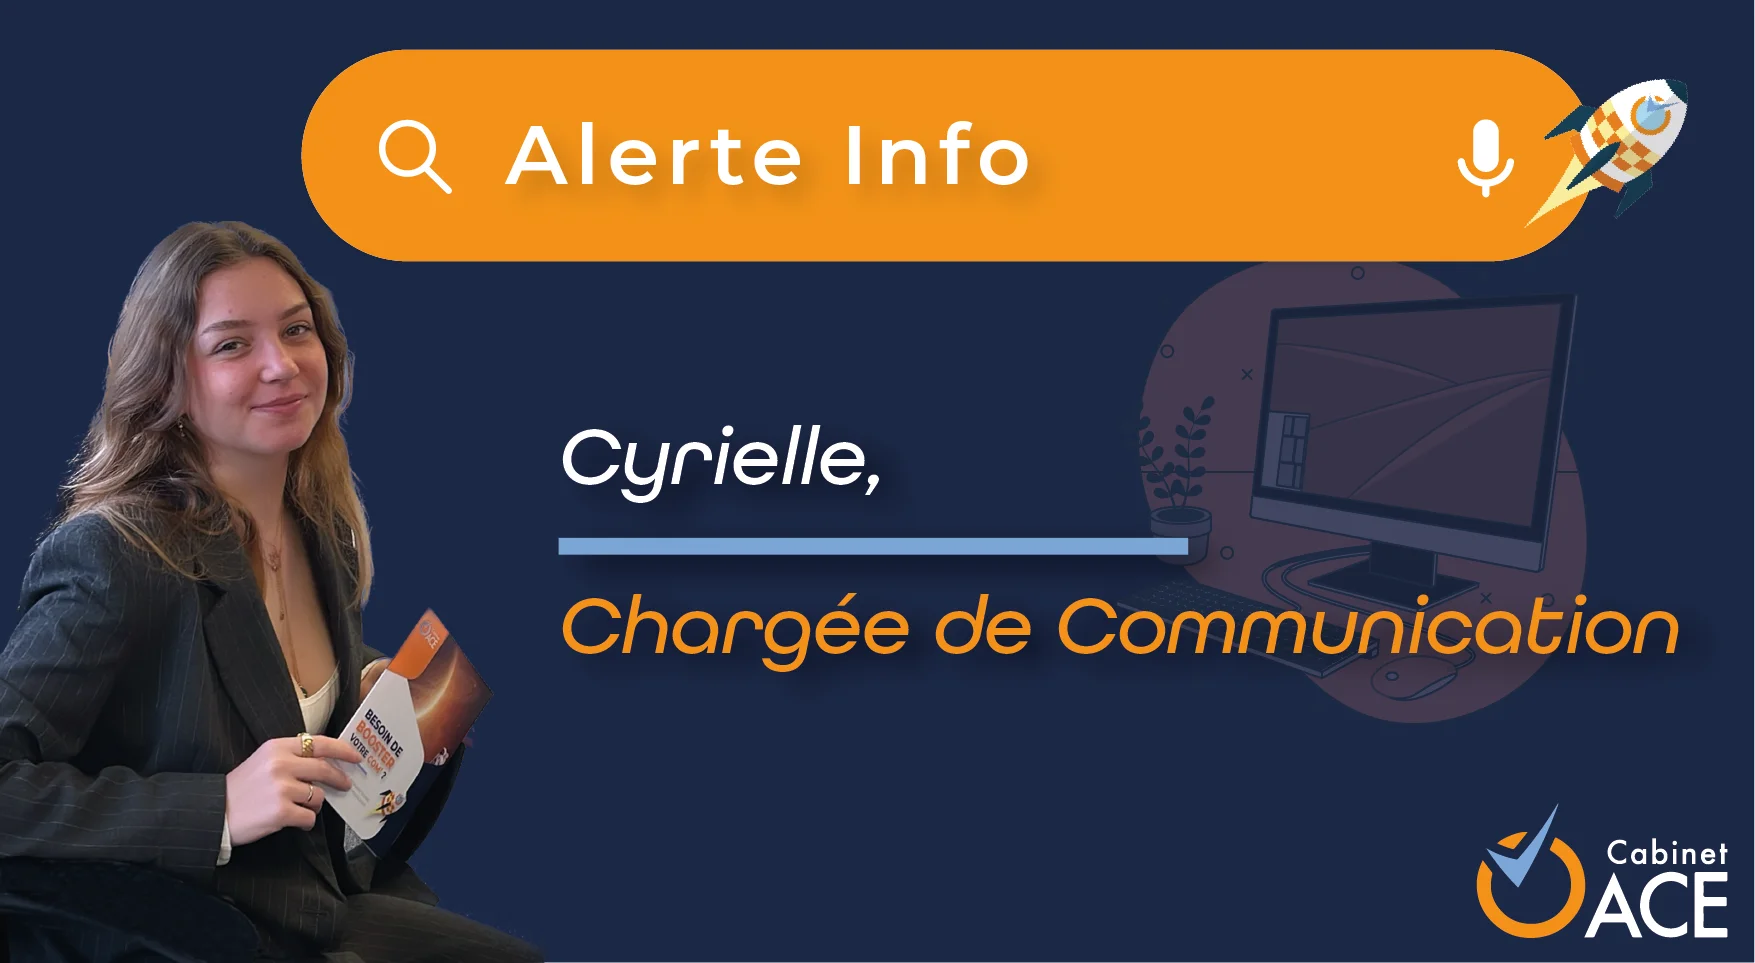 cyrielle article agence de communication angers cabinet ace 3